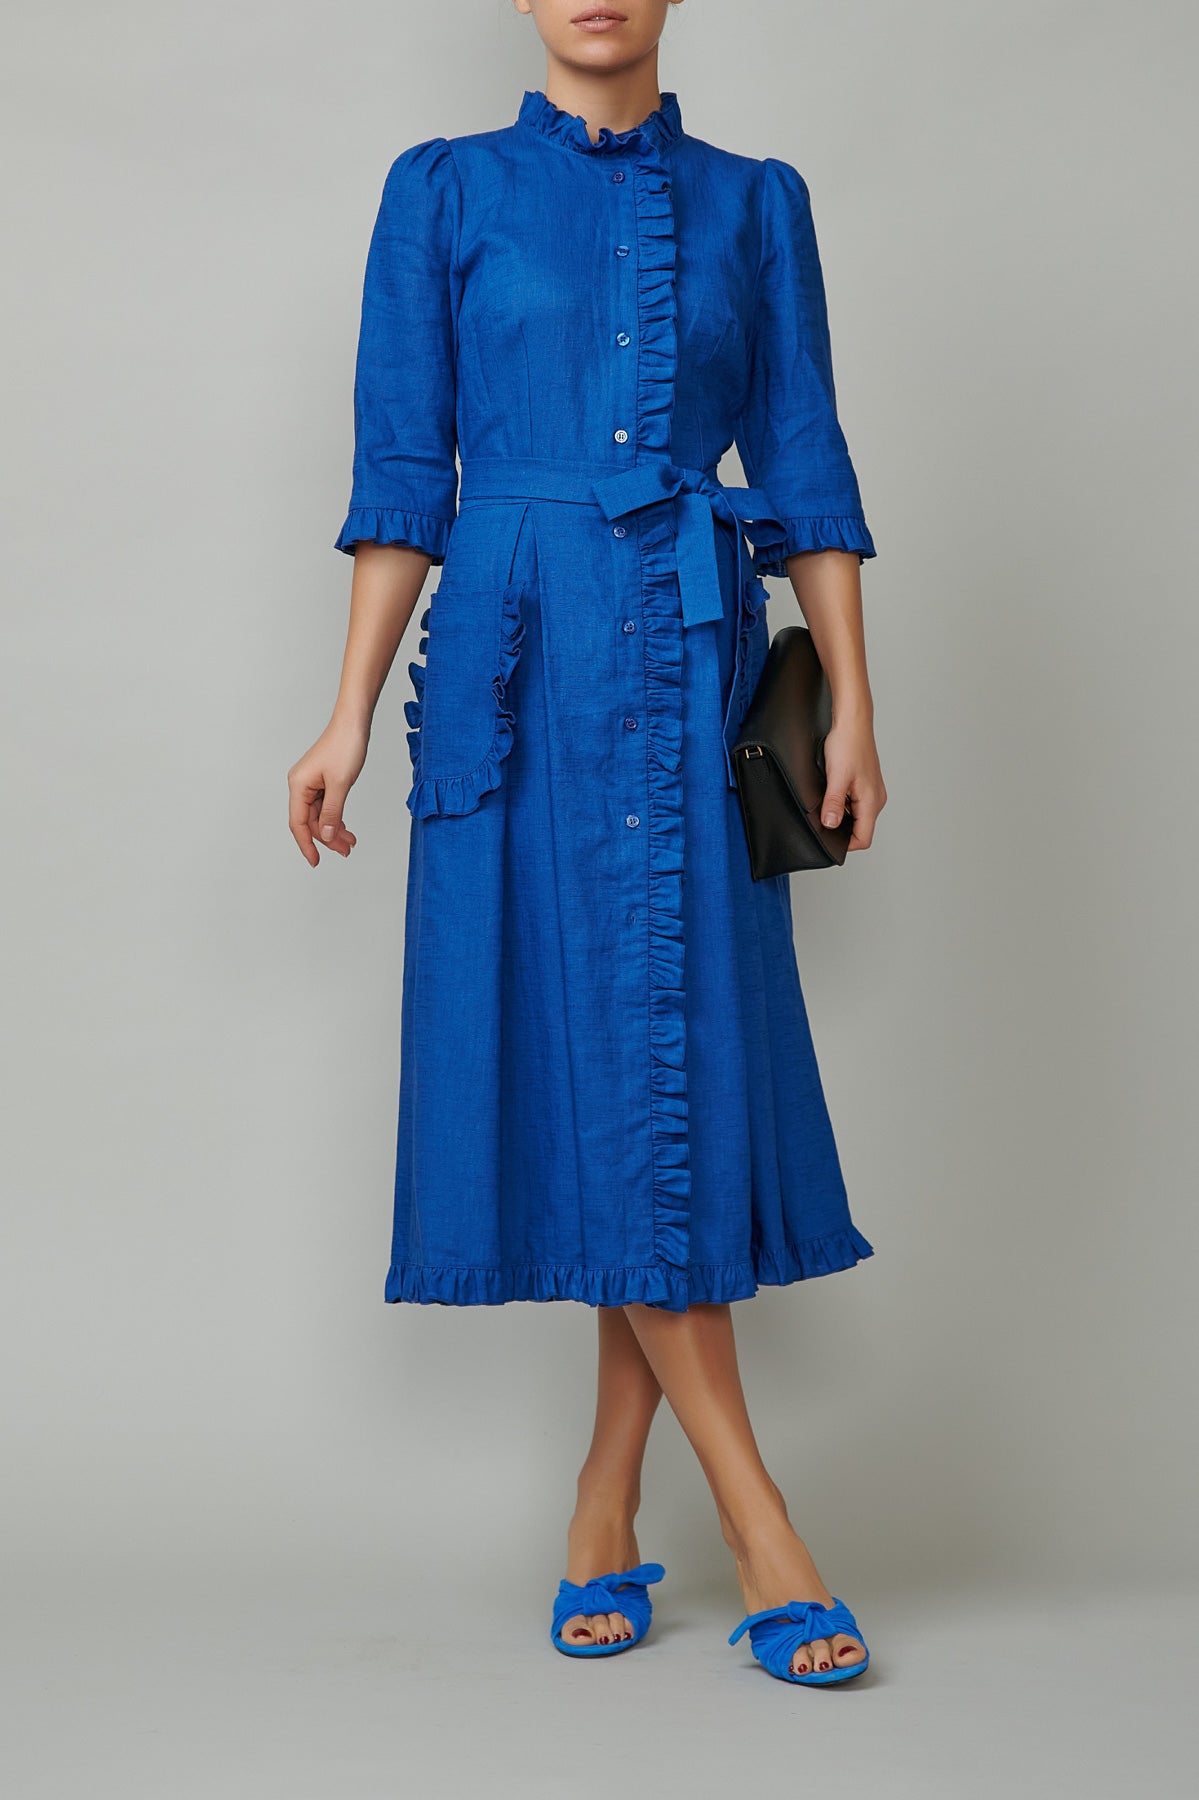 Blue linen shirt dress with applied pockets and ruffles